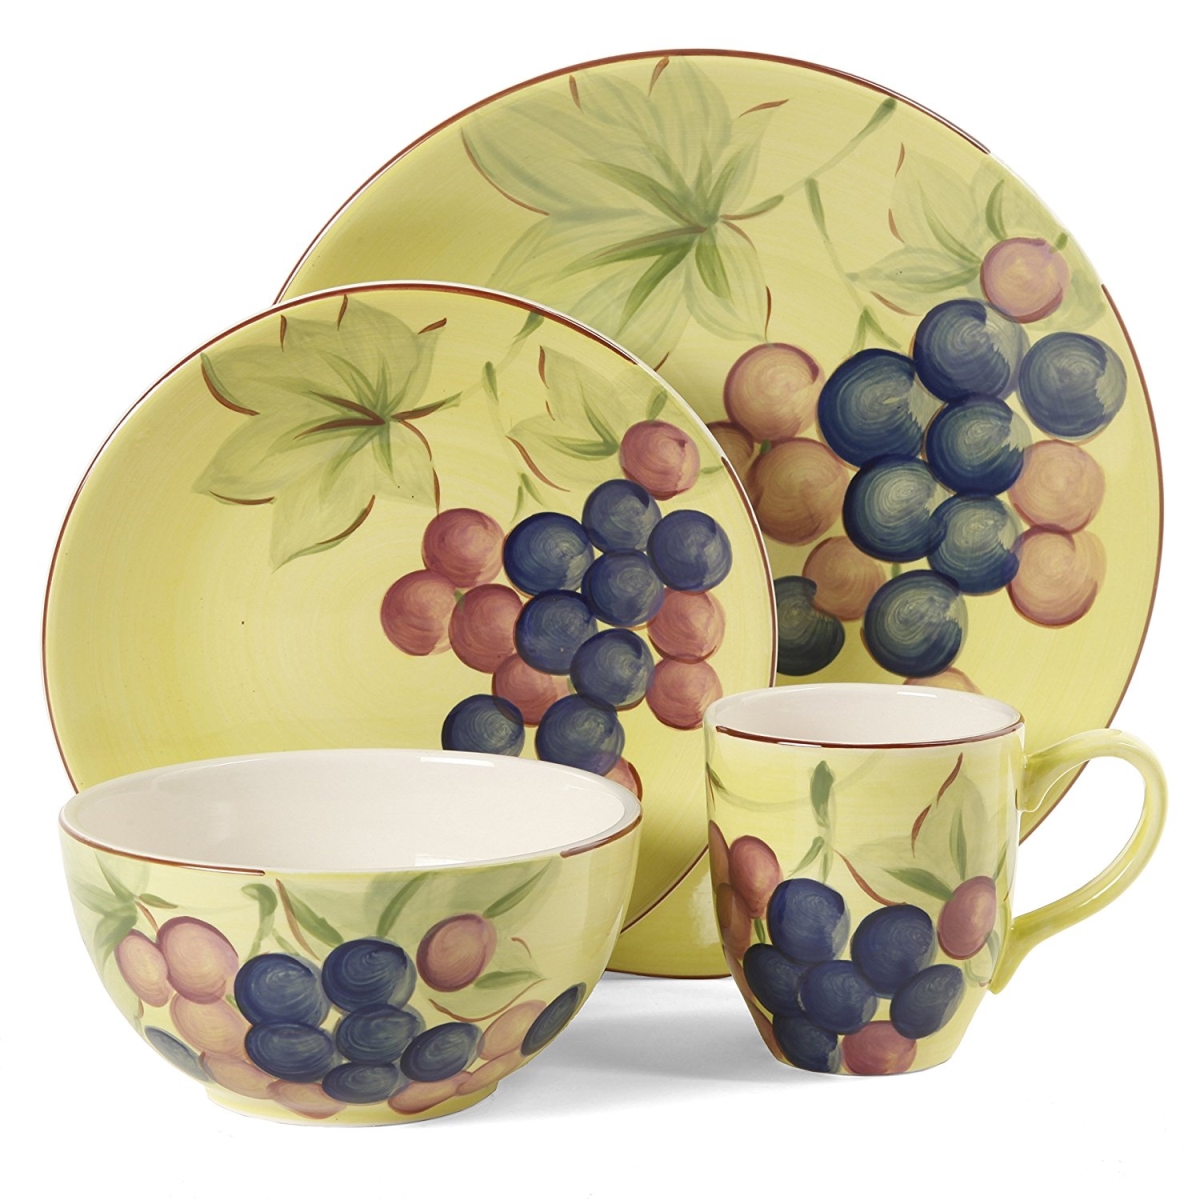 97976.16 Home Fruitful Harvest Grapes 16 Piece Dinnerware Set